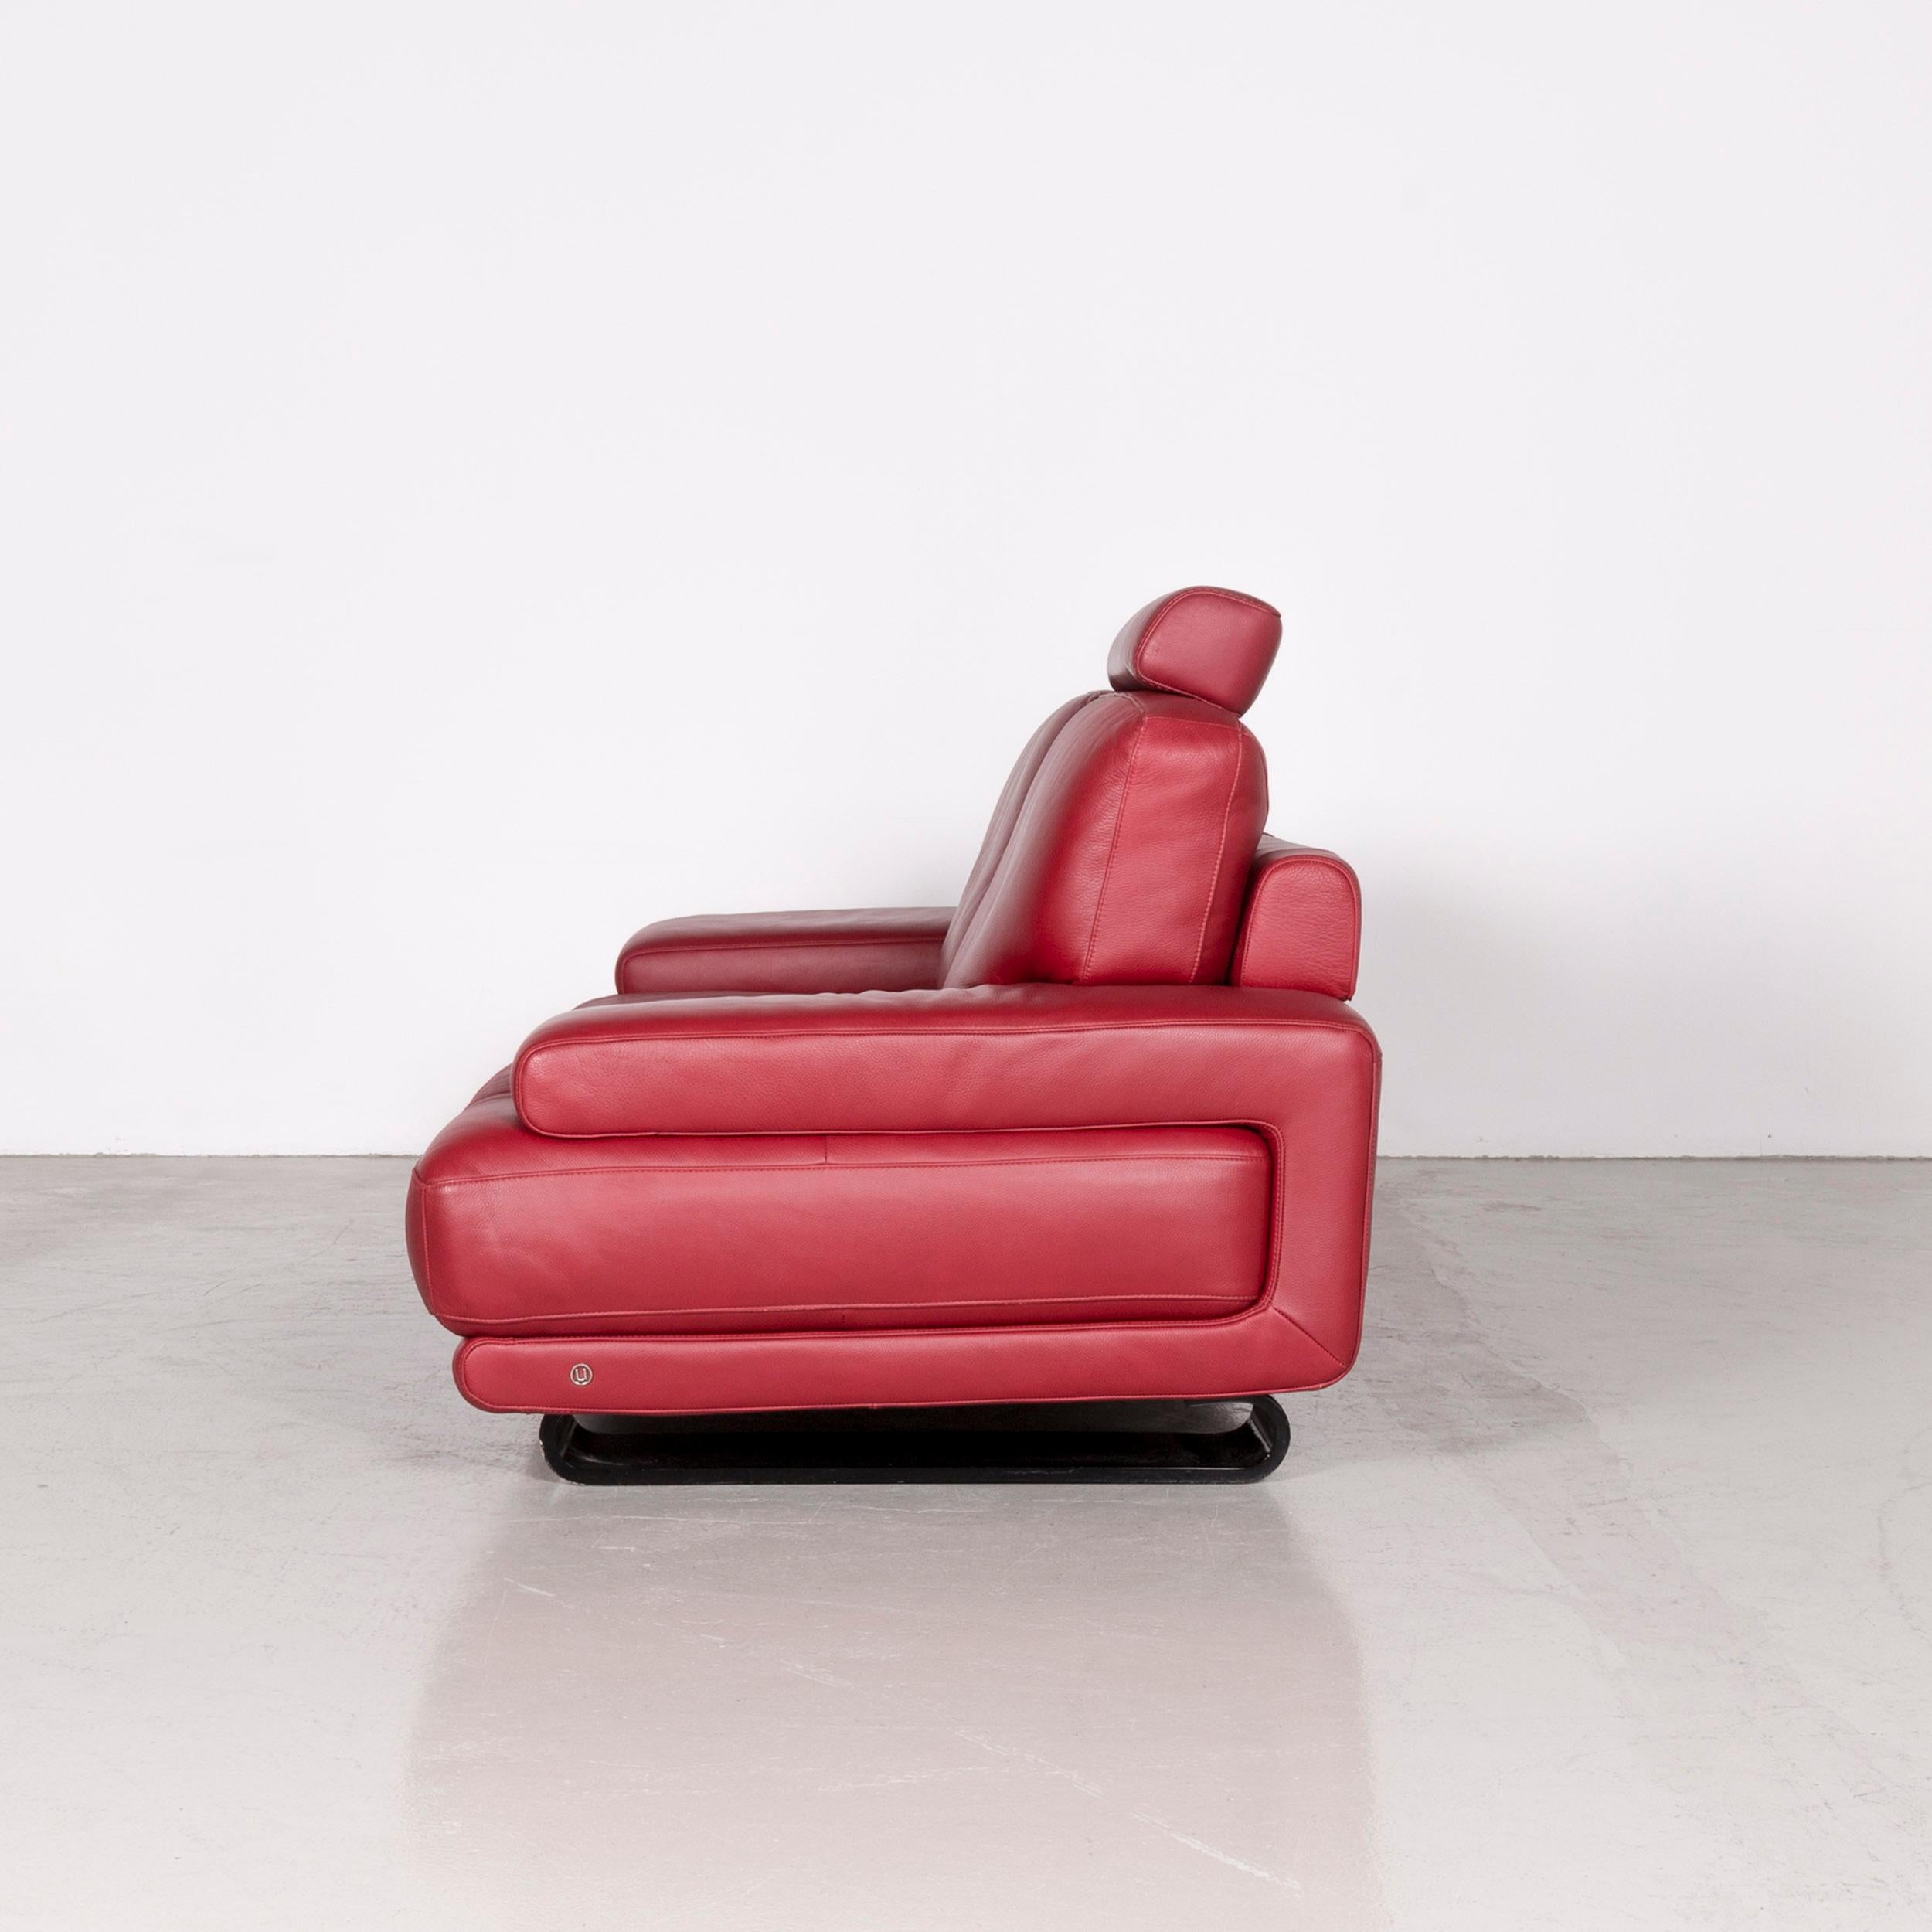 Natuzzi Designer Leather Sofa red Three-Seat Couch 2